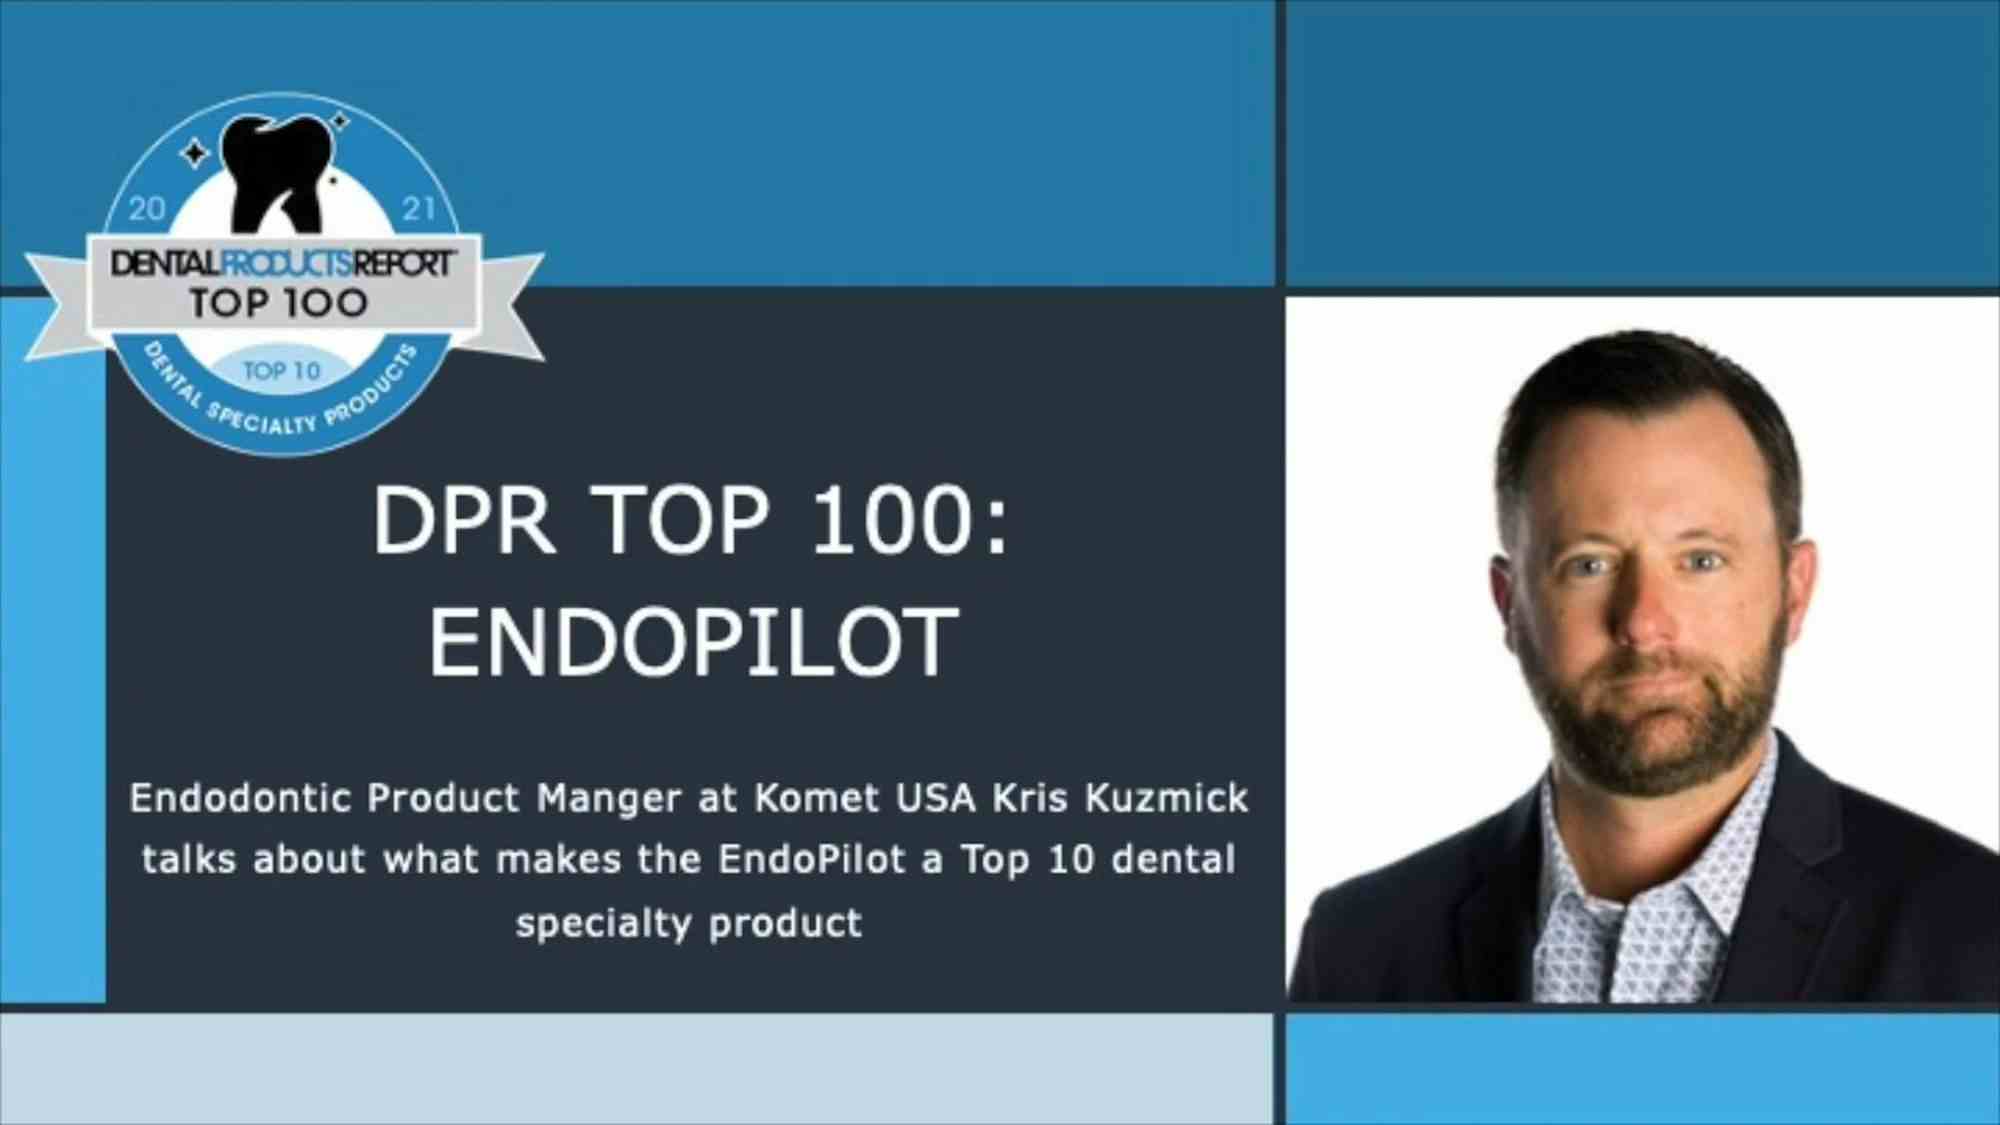 DPR Top 100: EndoPilot from Komet USA